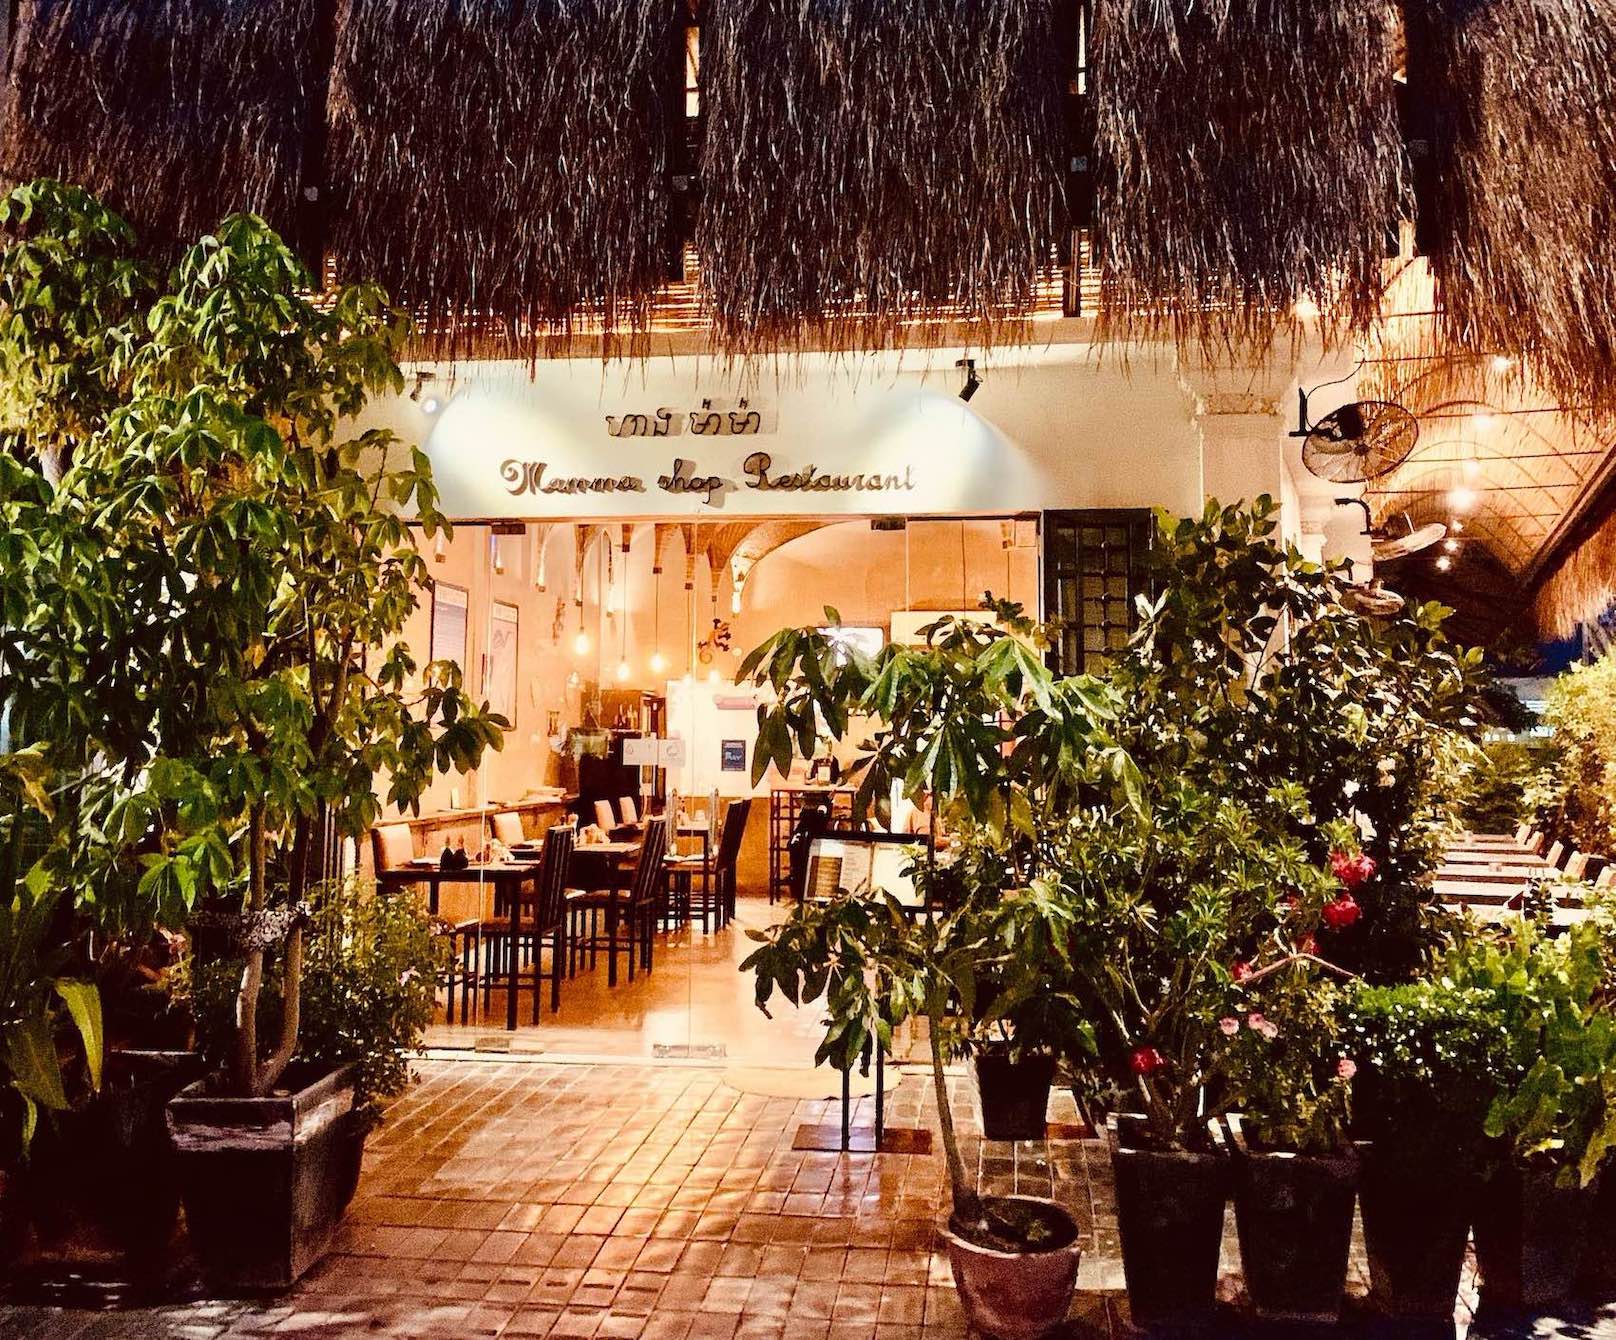 Mamma Shop Italian restaurant Cool Cafes and Restaurants in Siem Reap